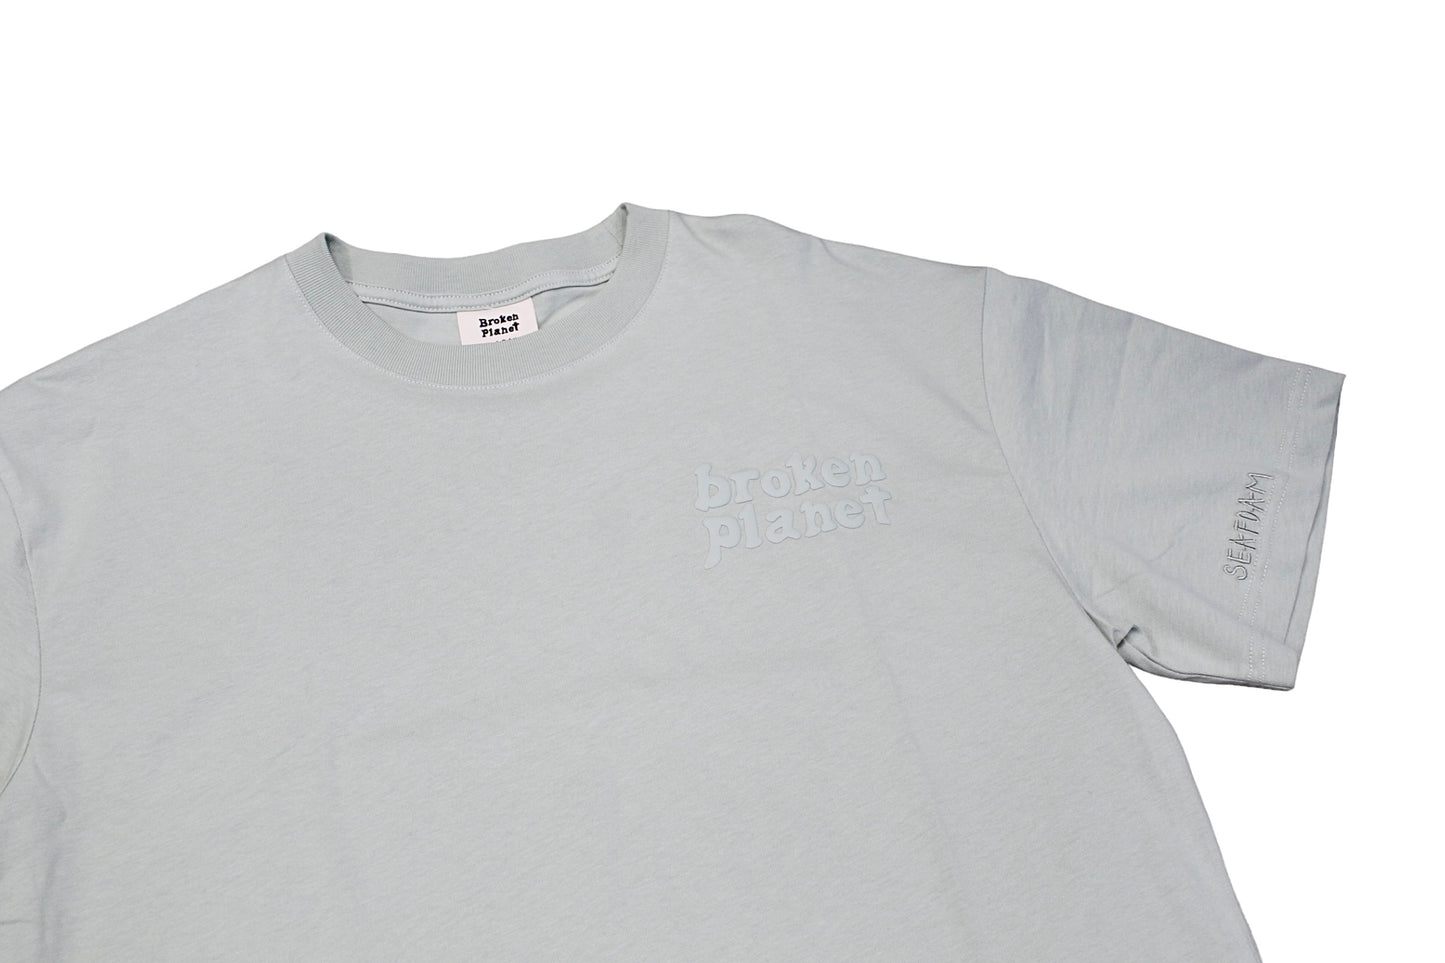 Broken Planet Basic Seafoam T-Shirt